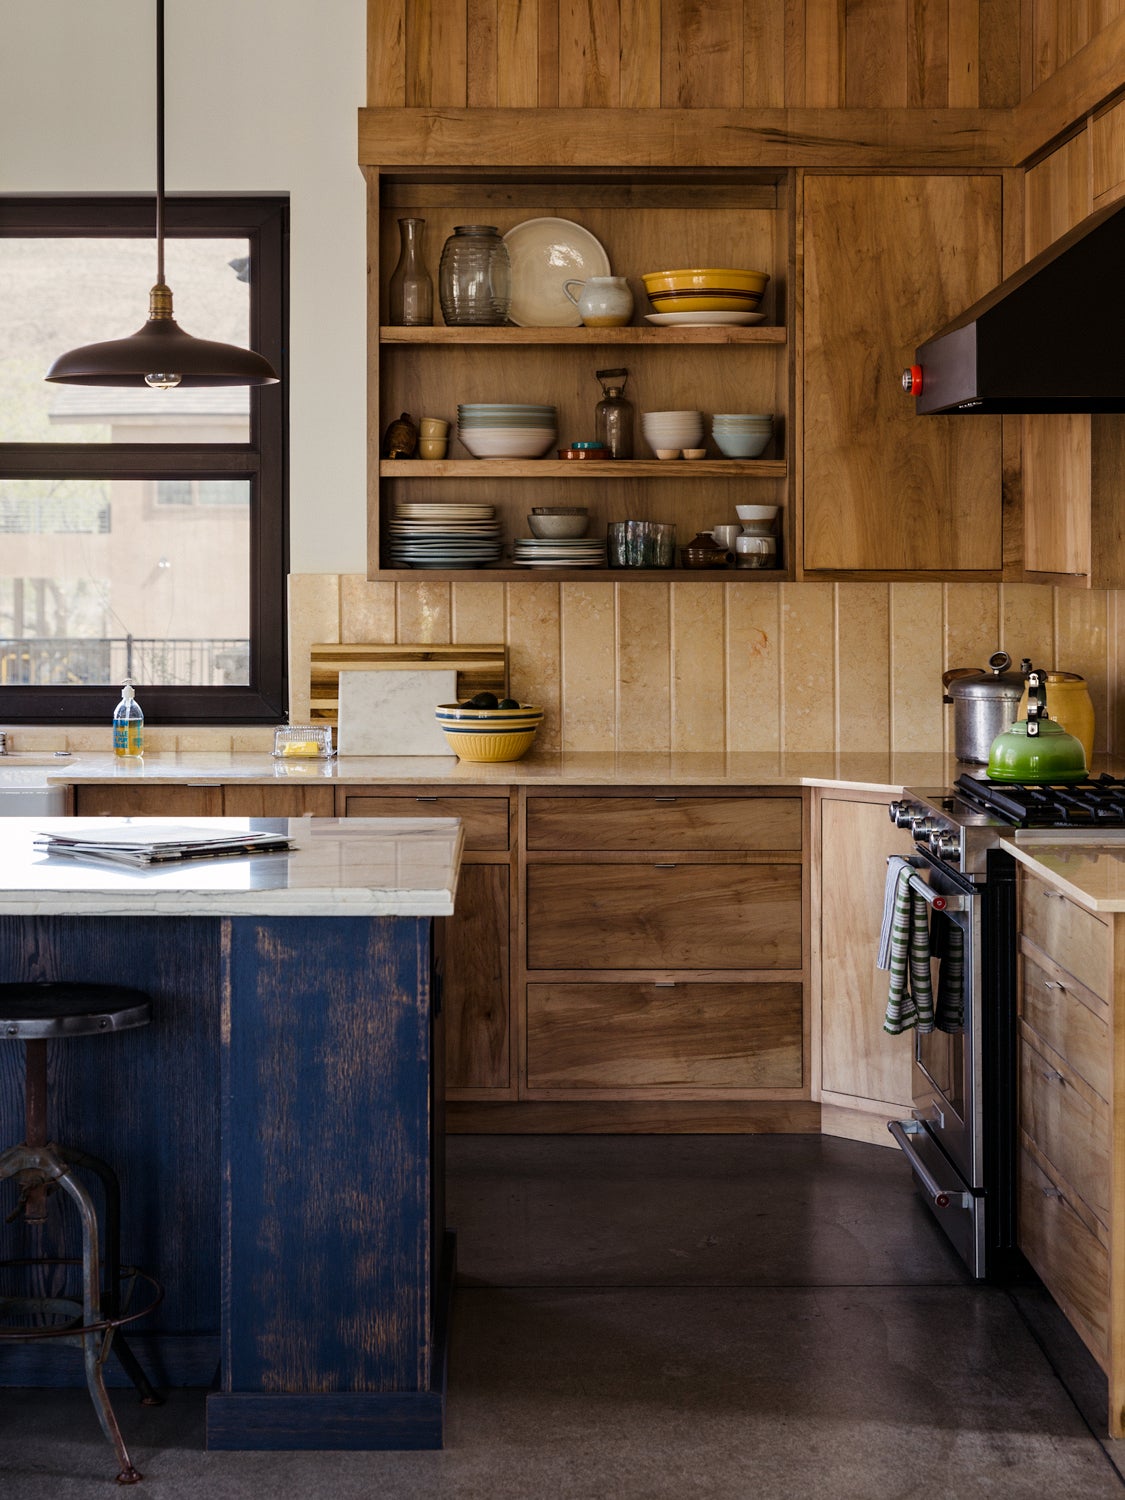 5 Rustic Kitchen Cabinets Ideas That Aren't Cliche